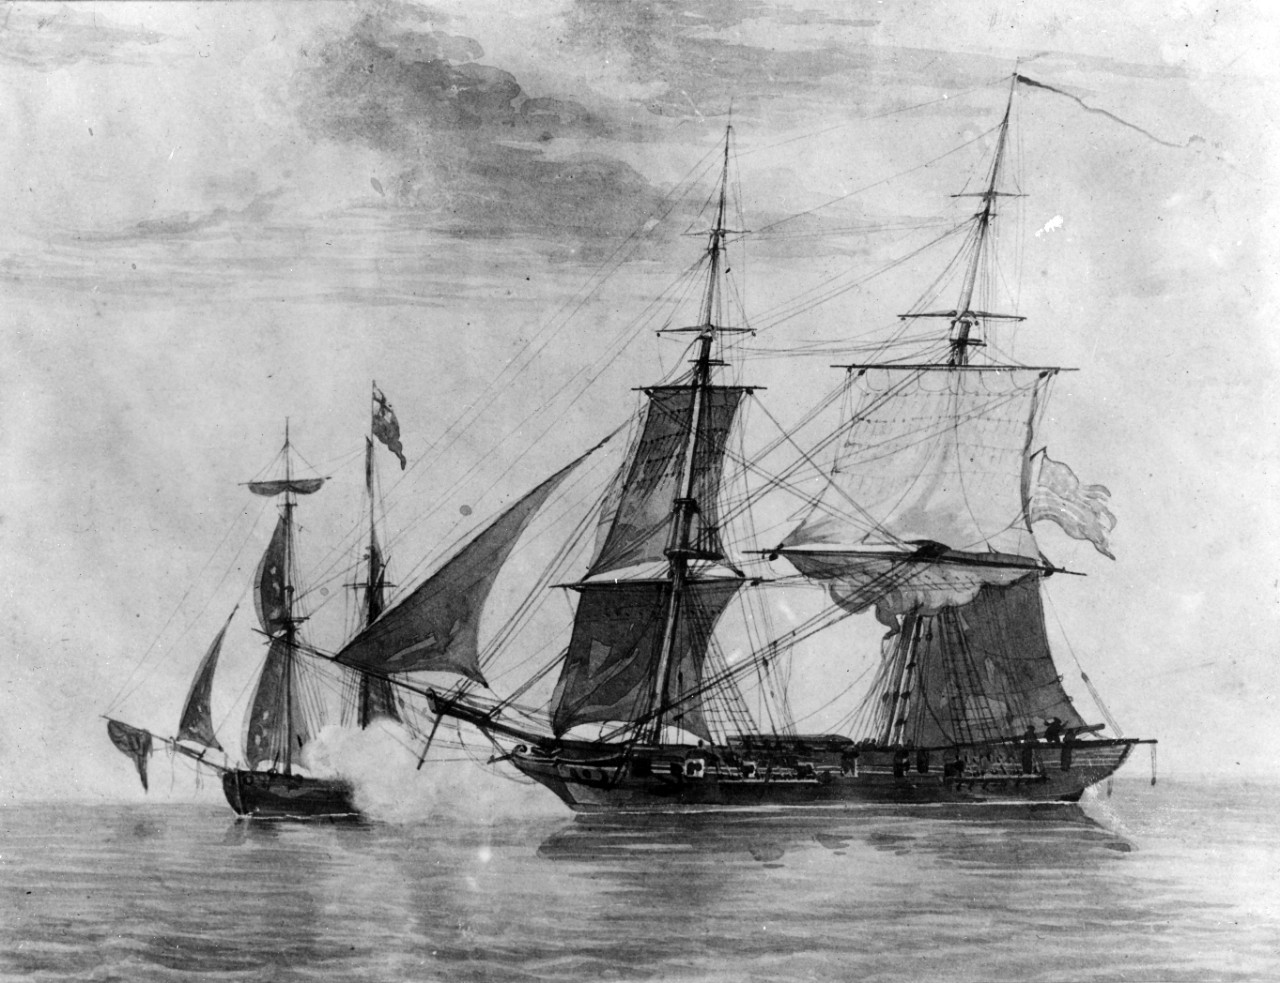 Battle between USS ENTERPRISE and HMS BOXER off coast of Maine, September 5, 1813. 